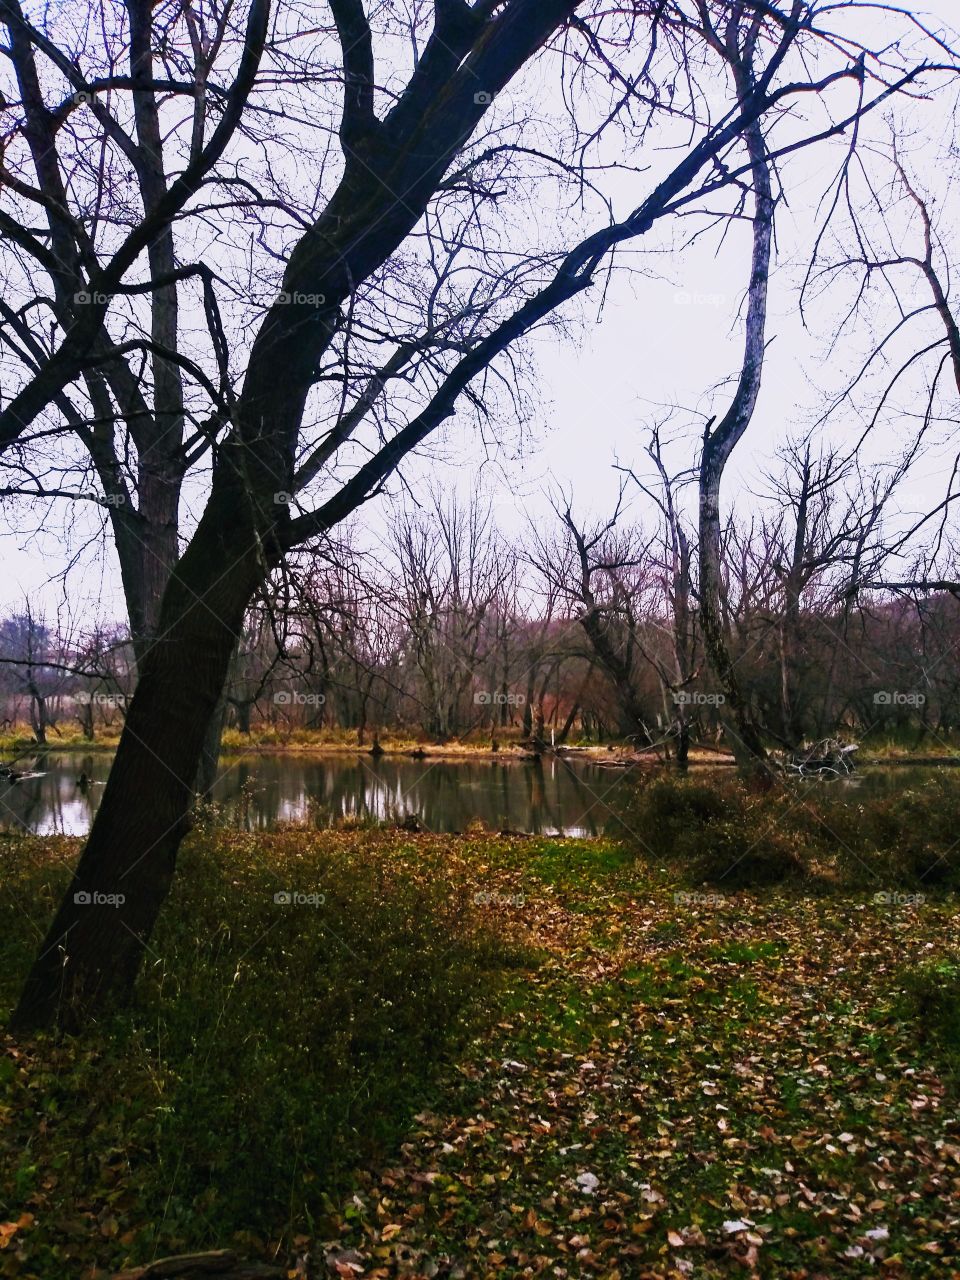 Tree, Landscape, Fall, Park, Leaf